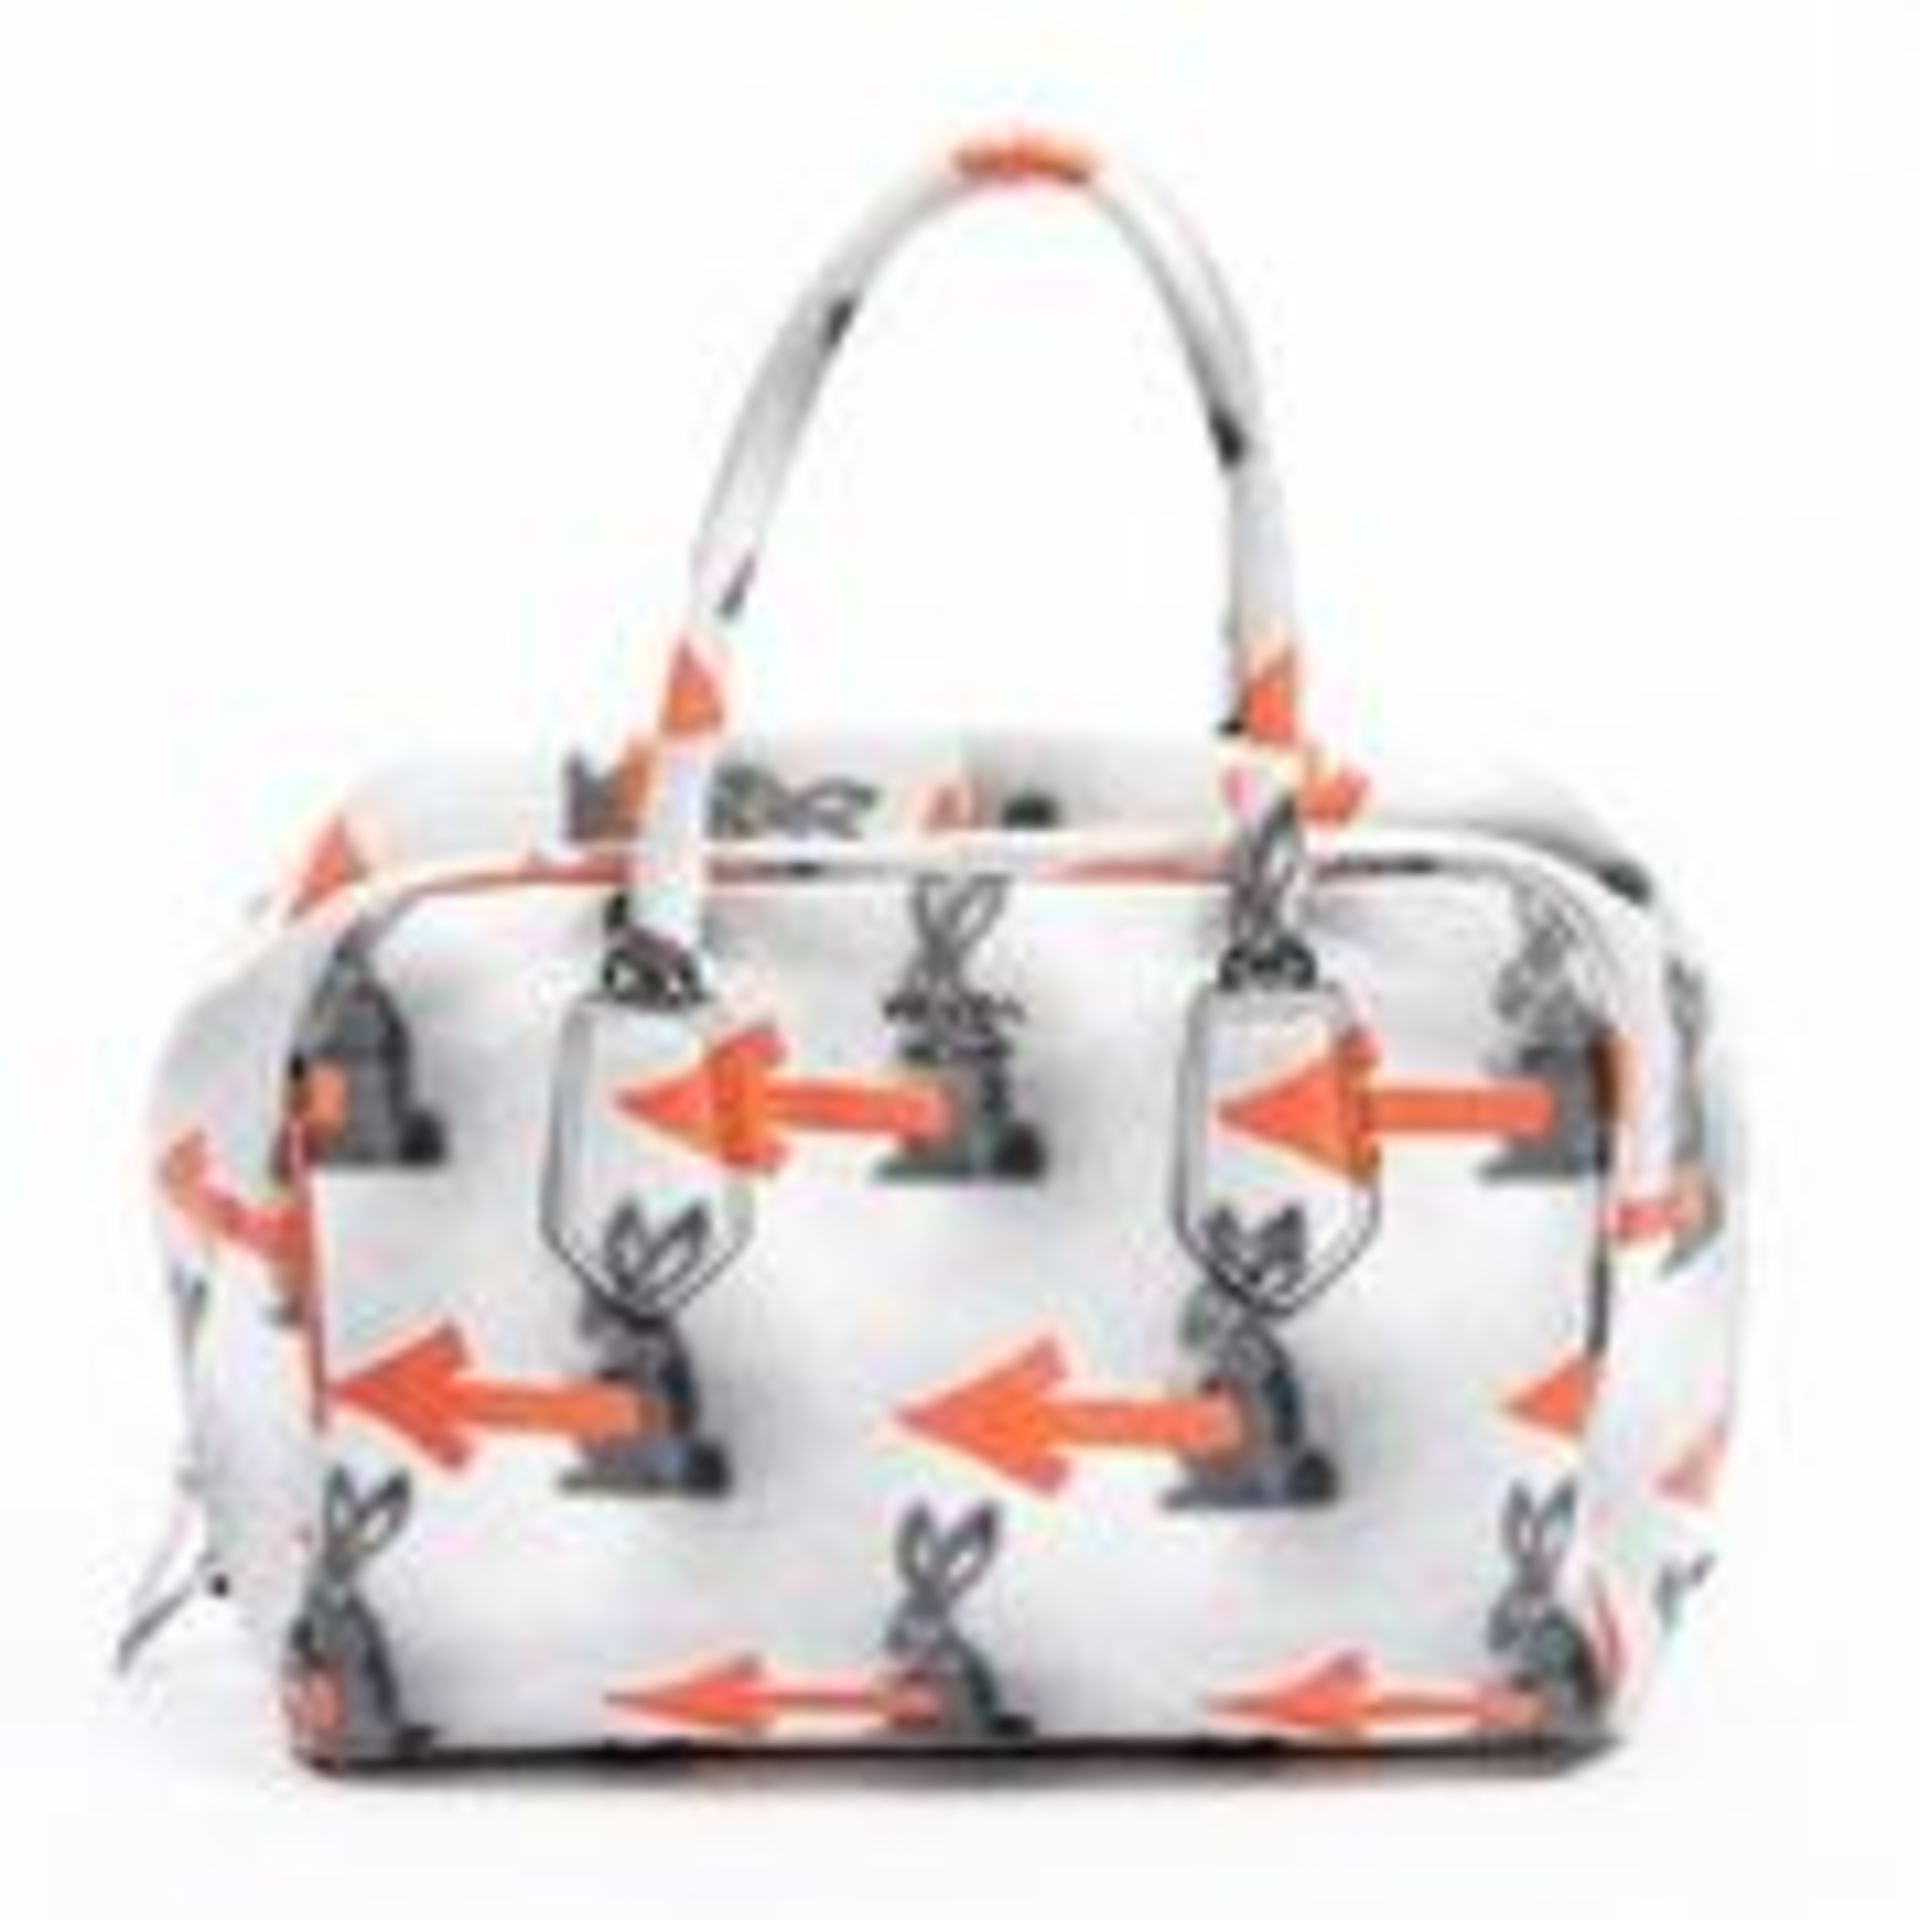 RRP £1,250 Prada Bunny Arrow Bowler Bag Handbag White/Orange/Black - Grade A - AAR3742 - Please